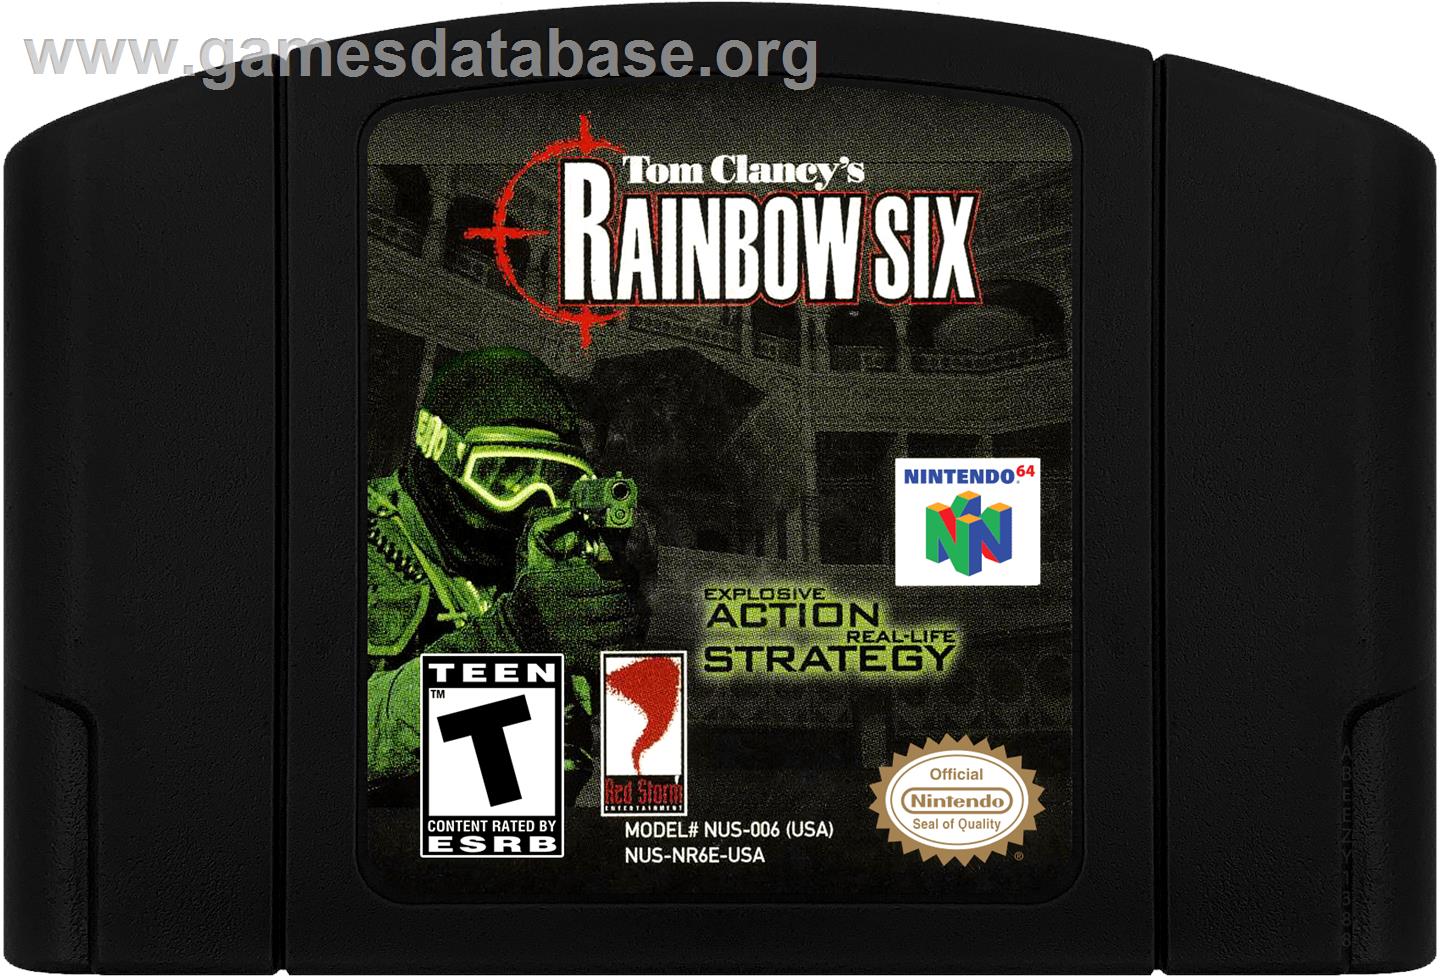 Tom Clancy's Rainbow Six - Nintendo N64 - Artwork - Cartridge